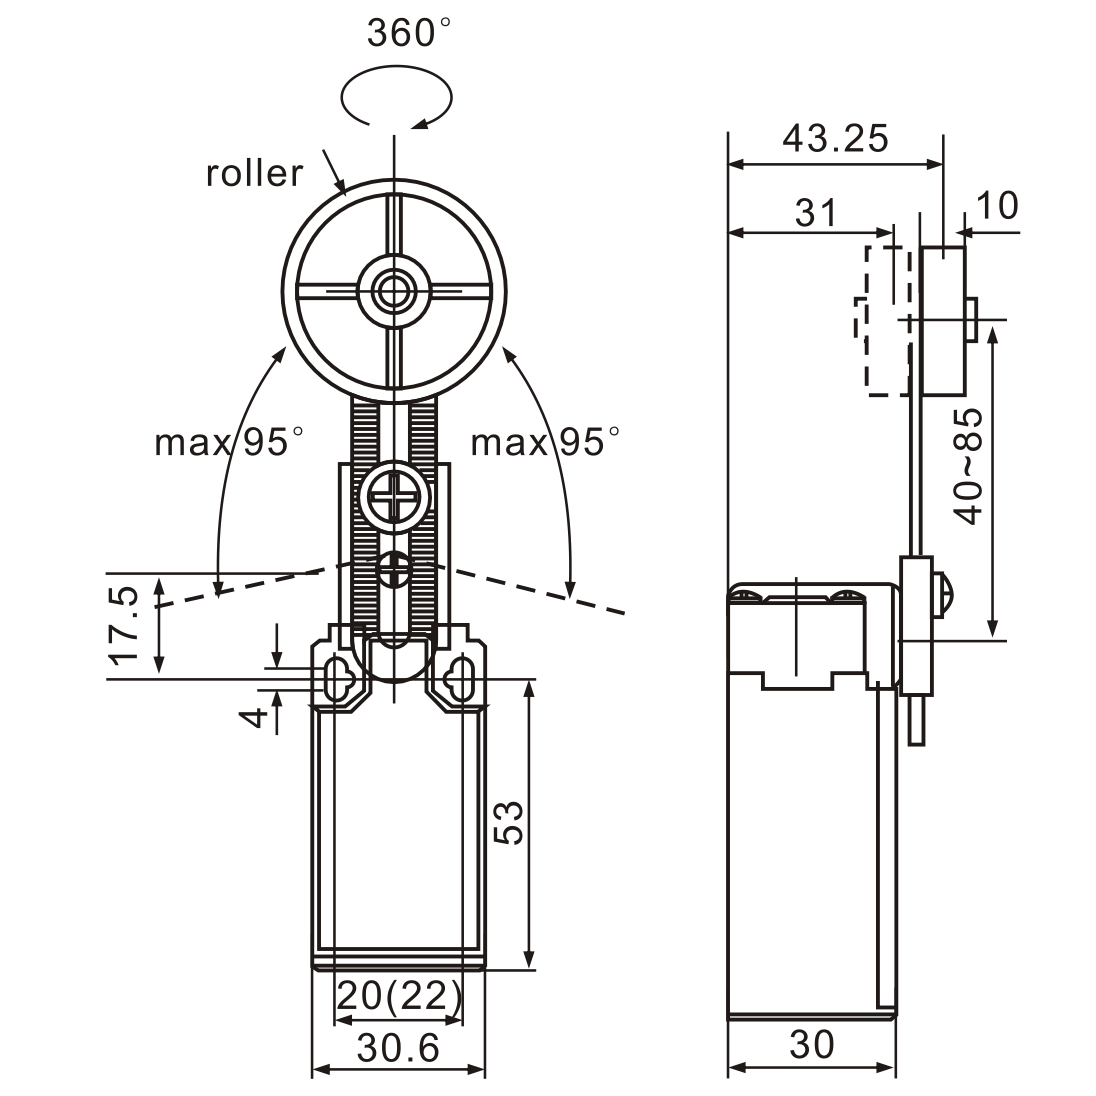 XCK-191 Adjustable Big Top-Roller Lever Actuator Limit Switch Diagram